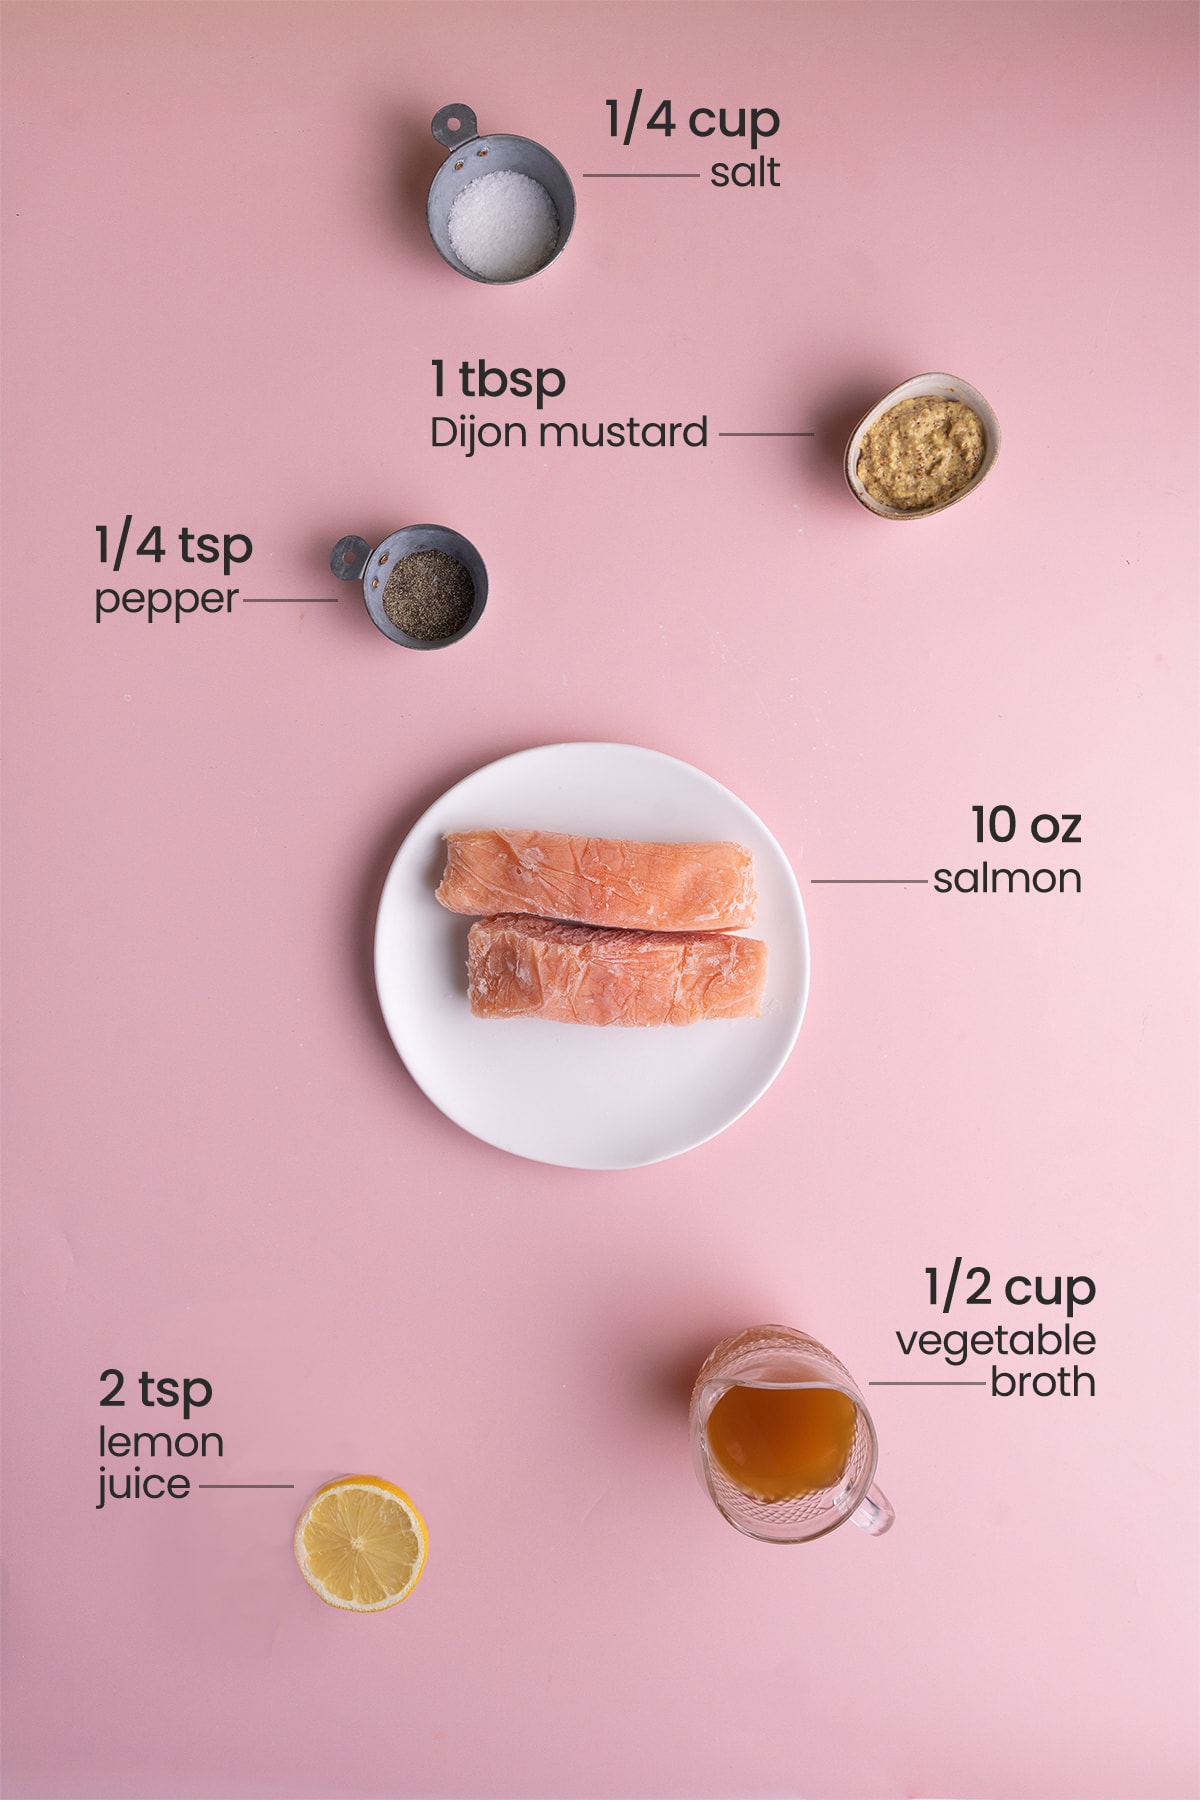 ingredients to cook salmon from frozen: salt, Dijon mustard, pepper, salmon, vegetable broth, lemon juice